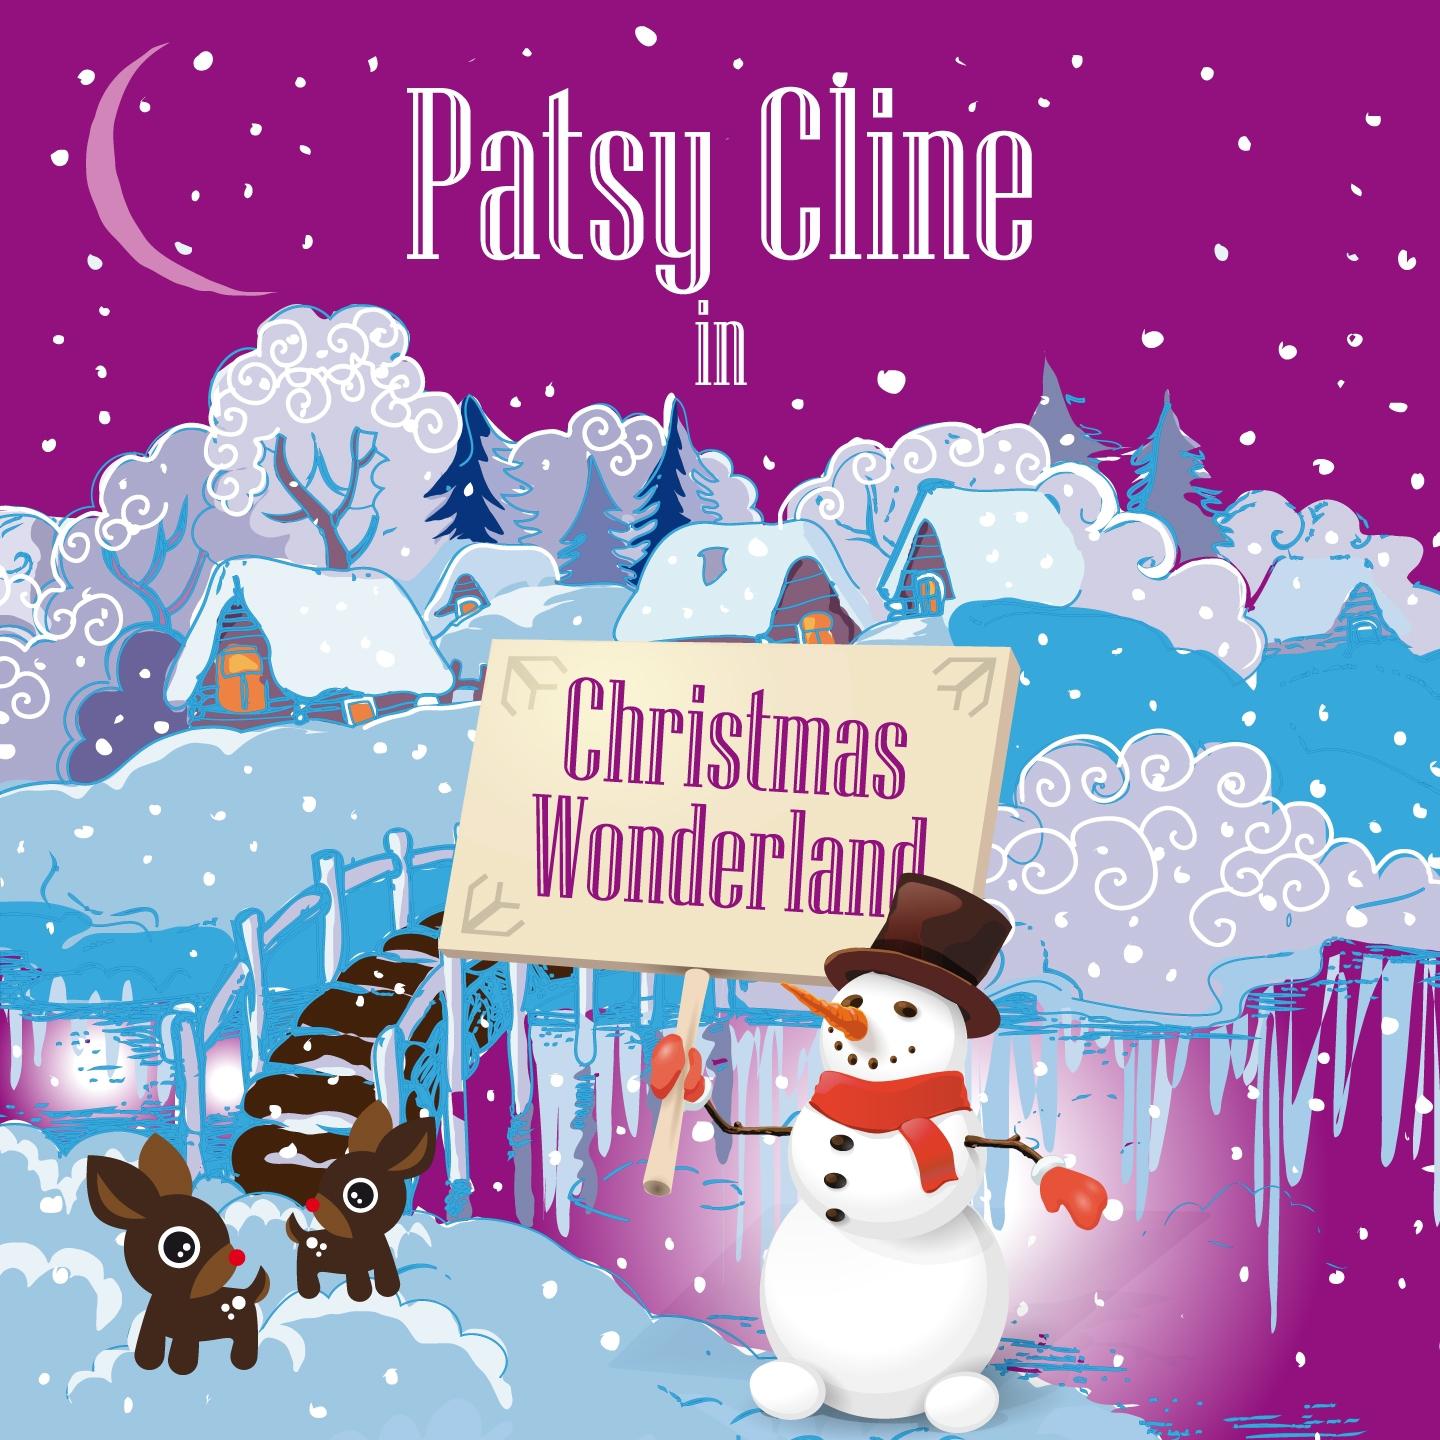 Patsy Cline in Christmas Wonderland